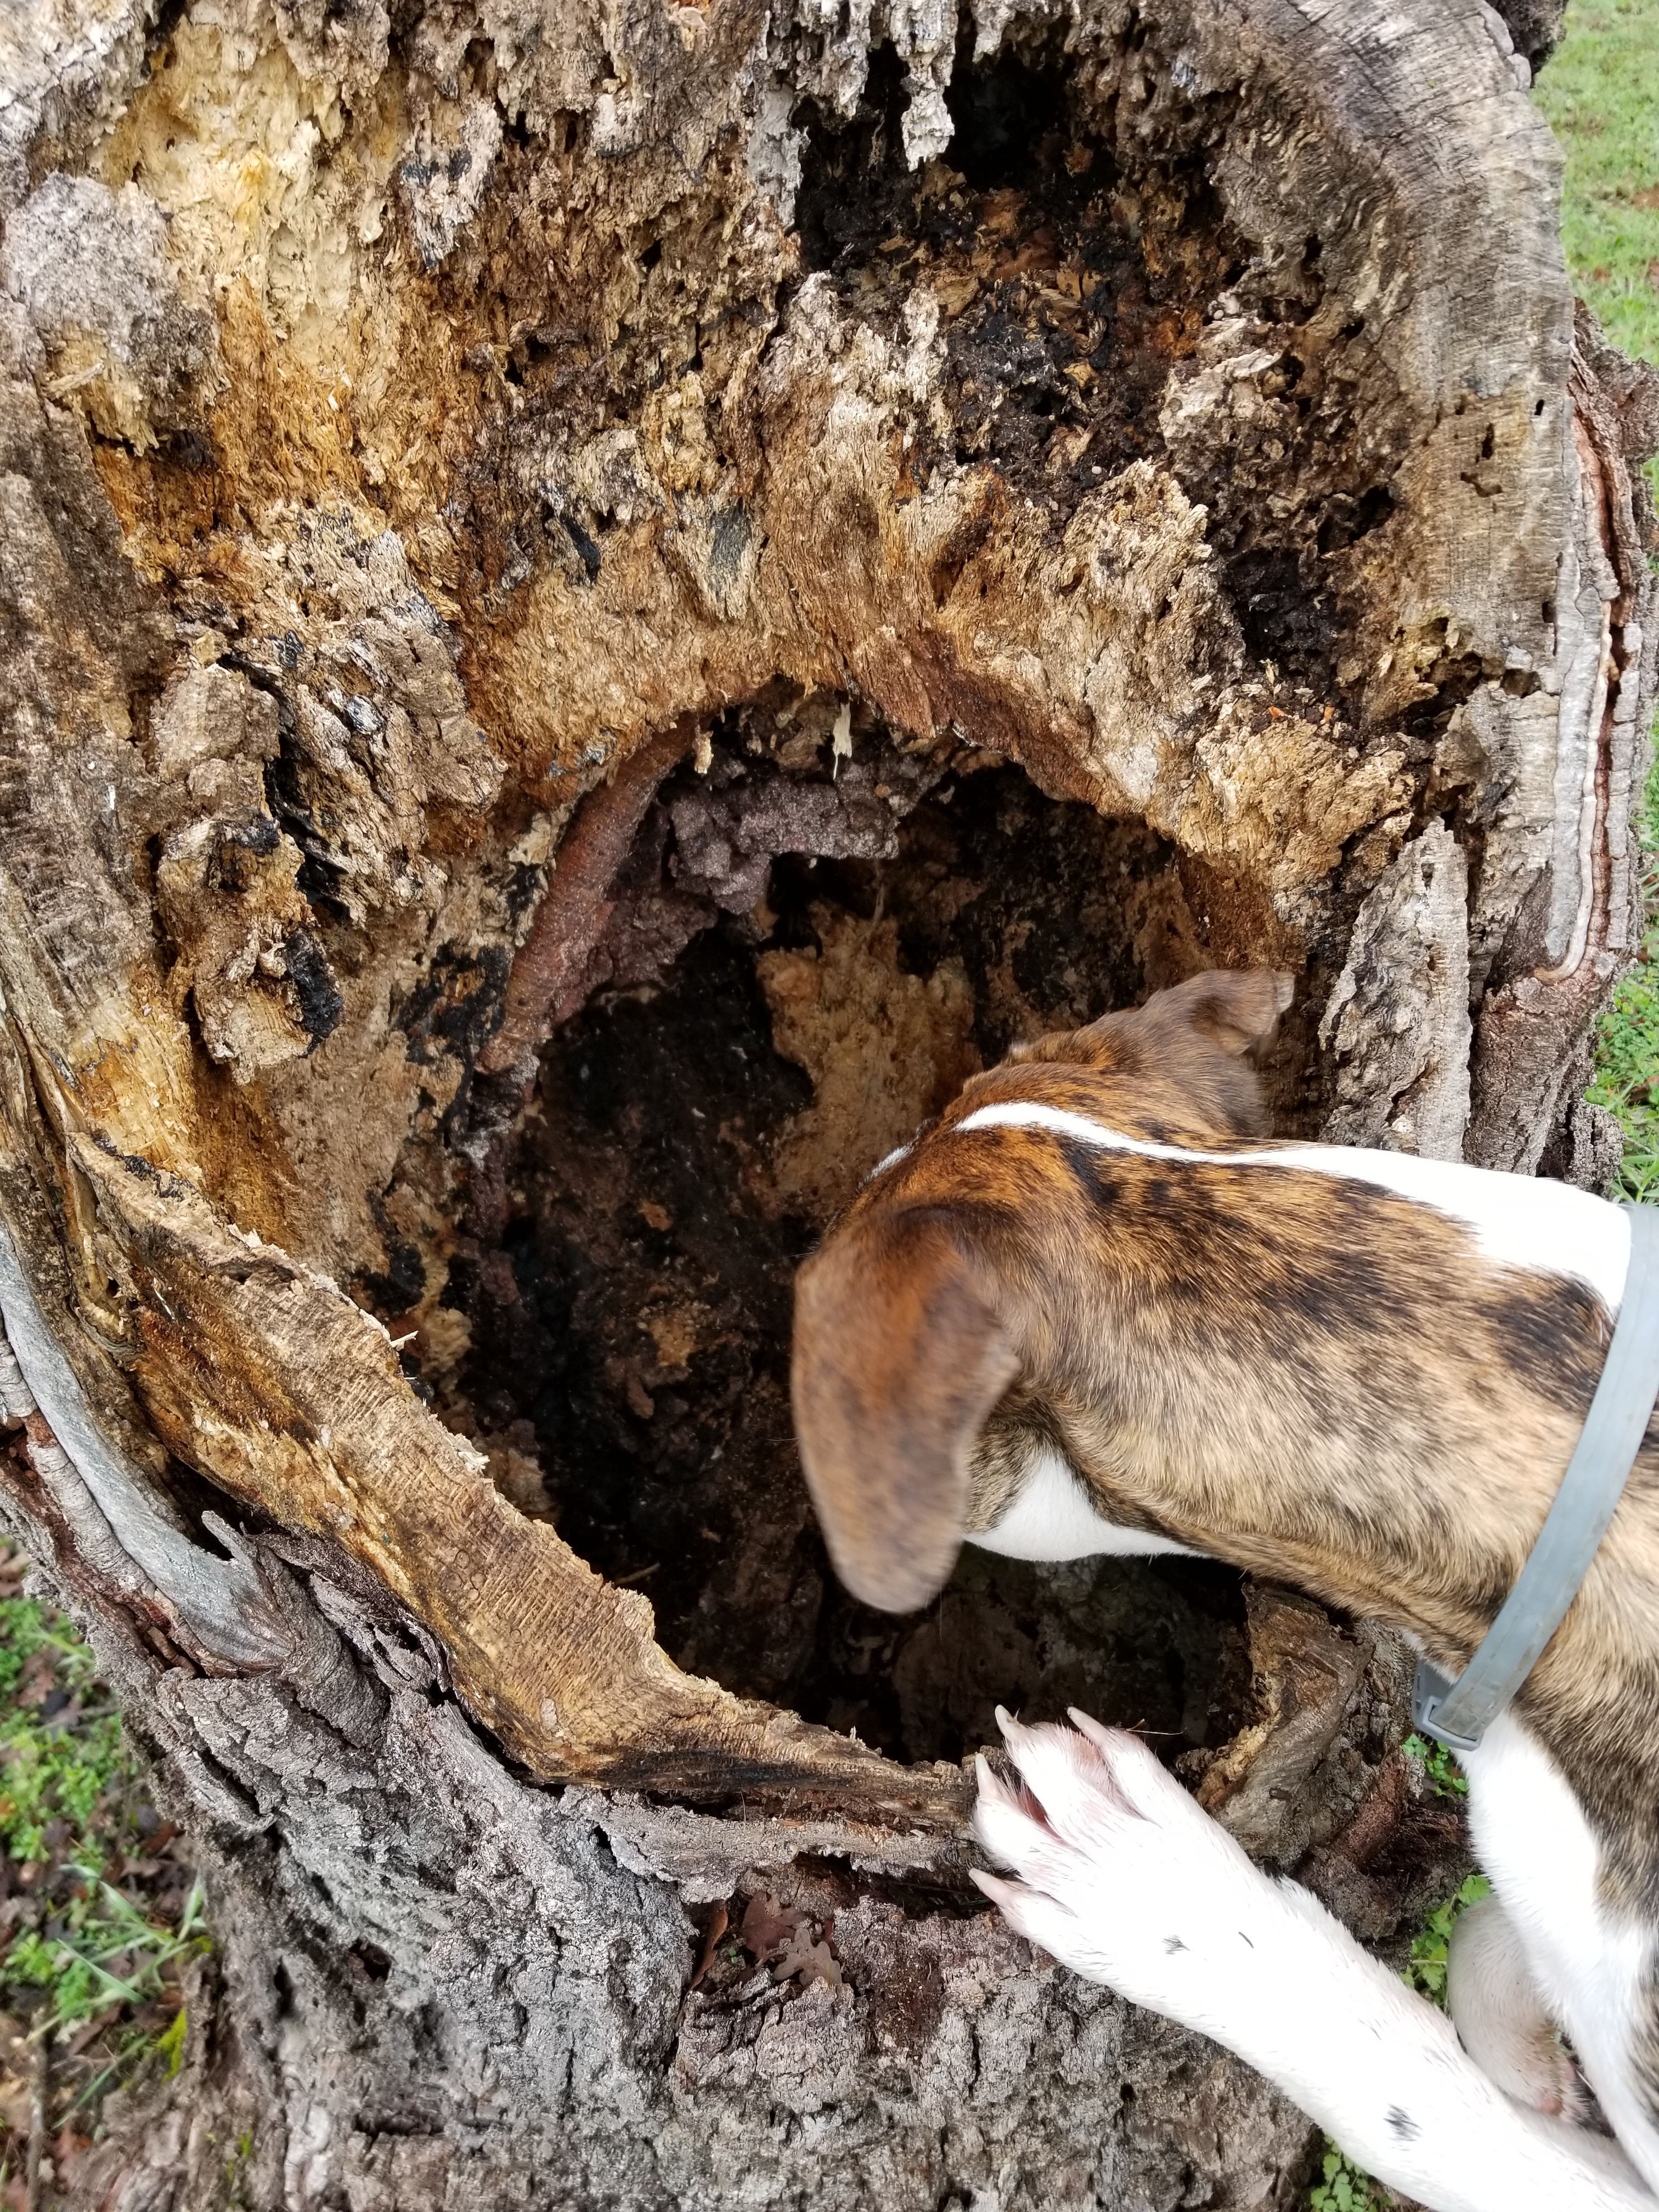 dog and tree stump